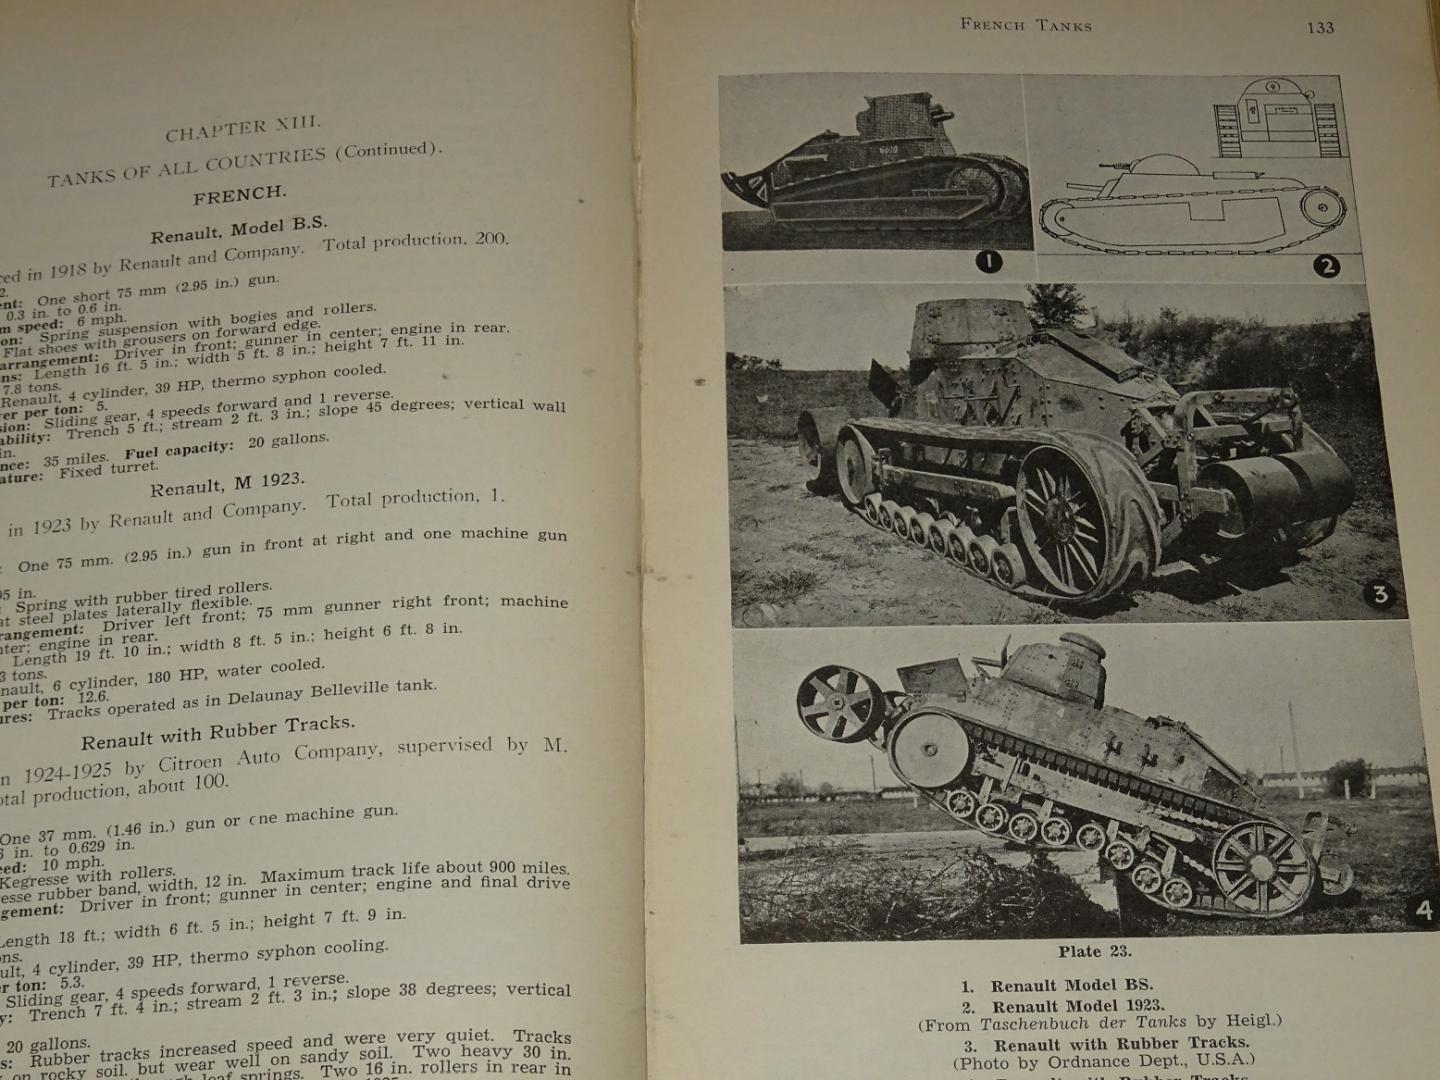 Jones, Ralph E. - Rarey, George H. & Icks, Robert J. - The Fighting Tanks since 1916